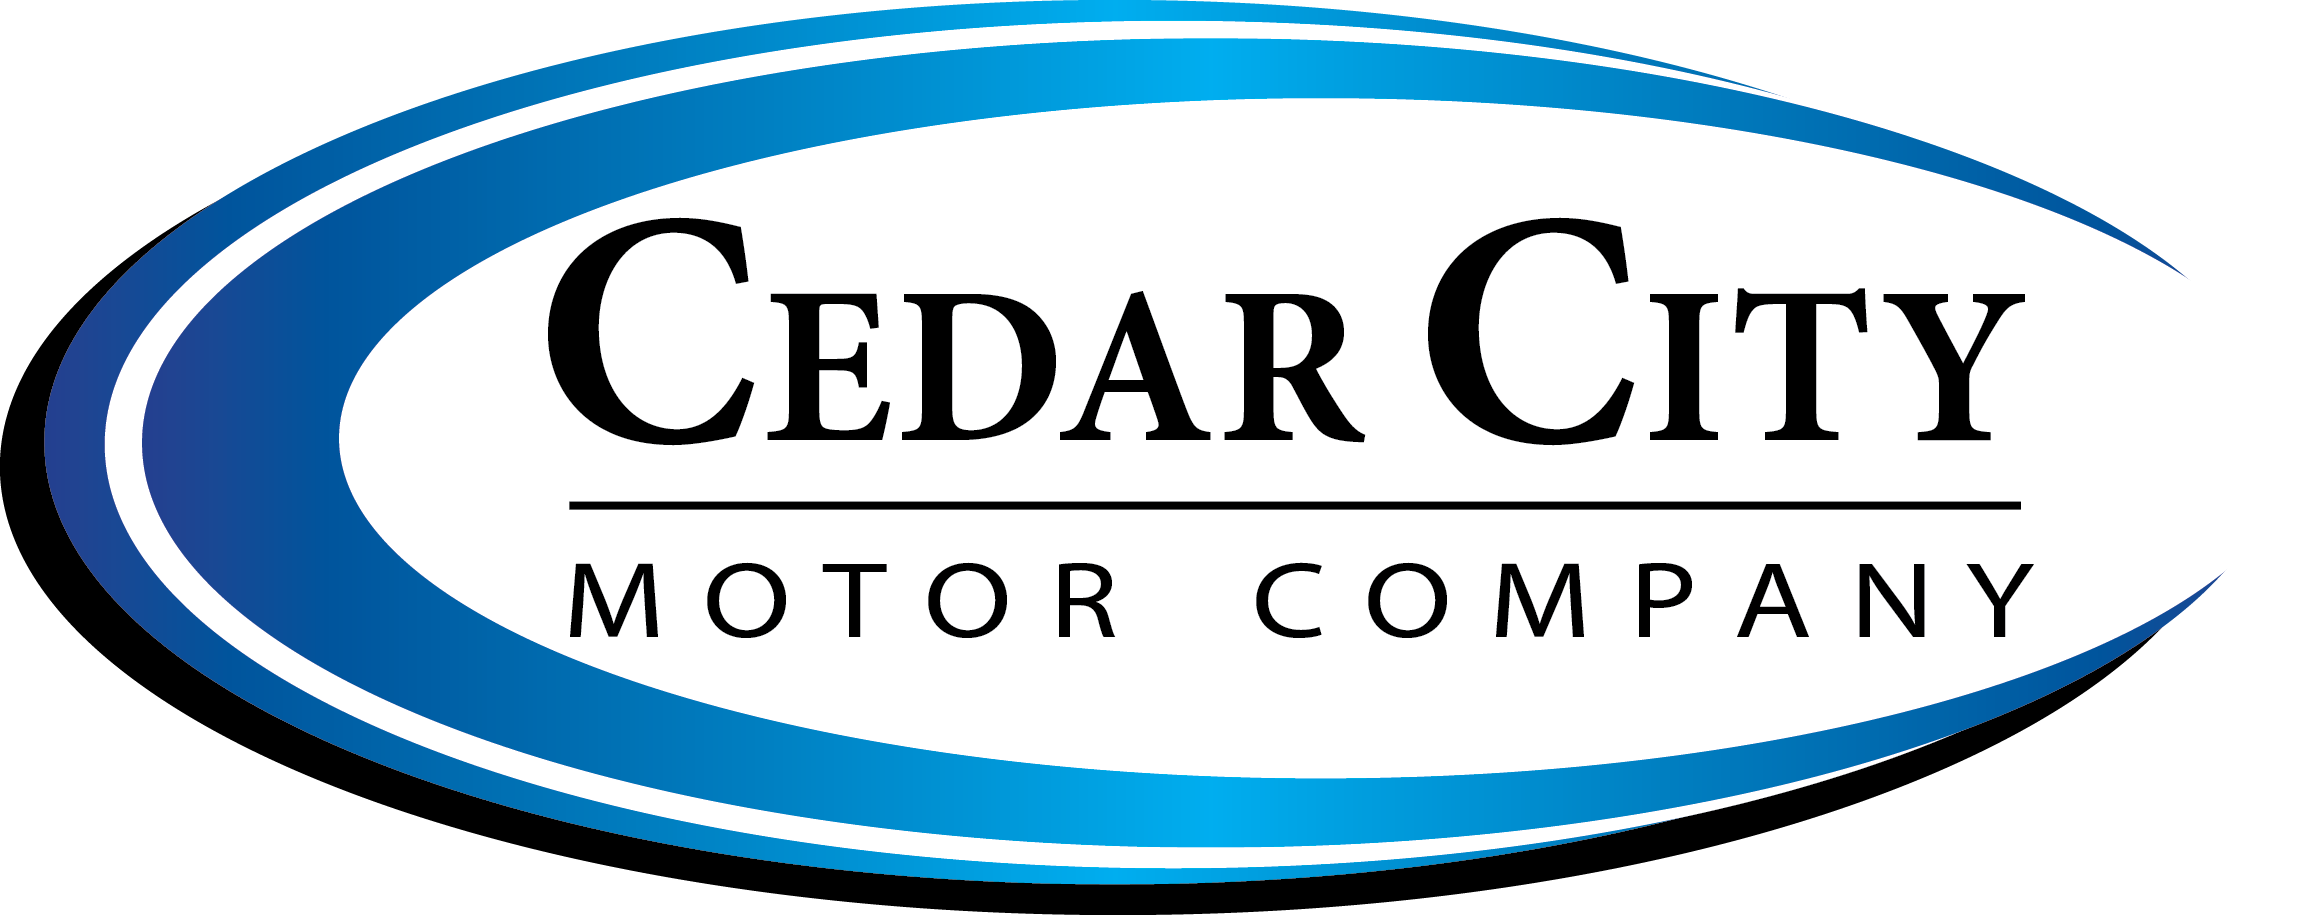 Cedar City Motor Company Finance Products